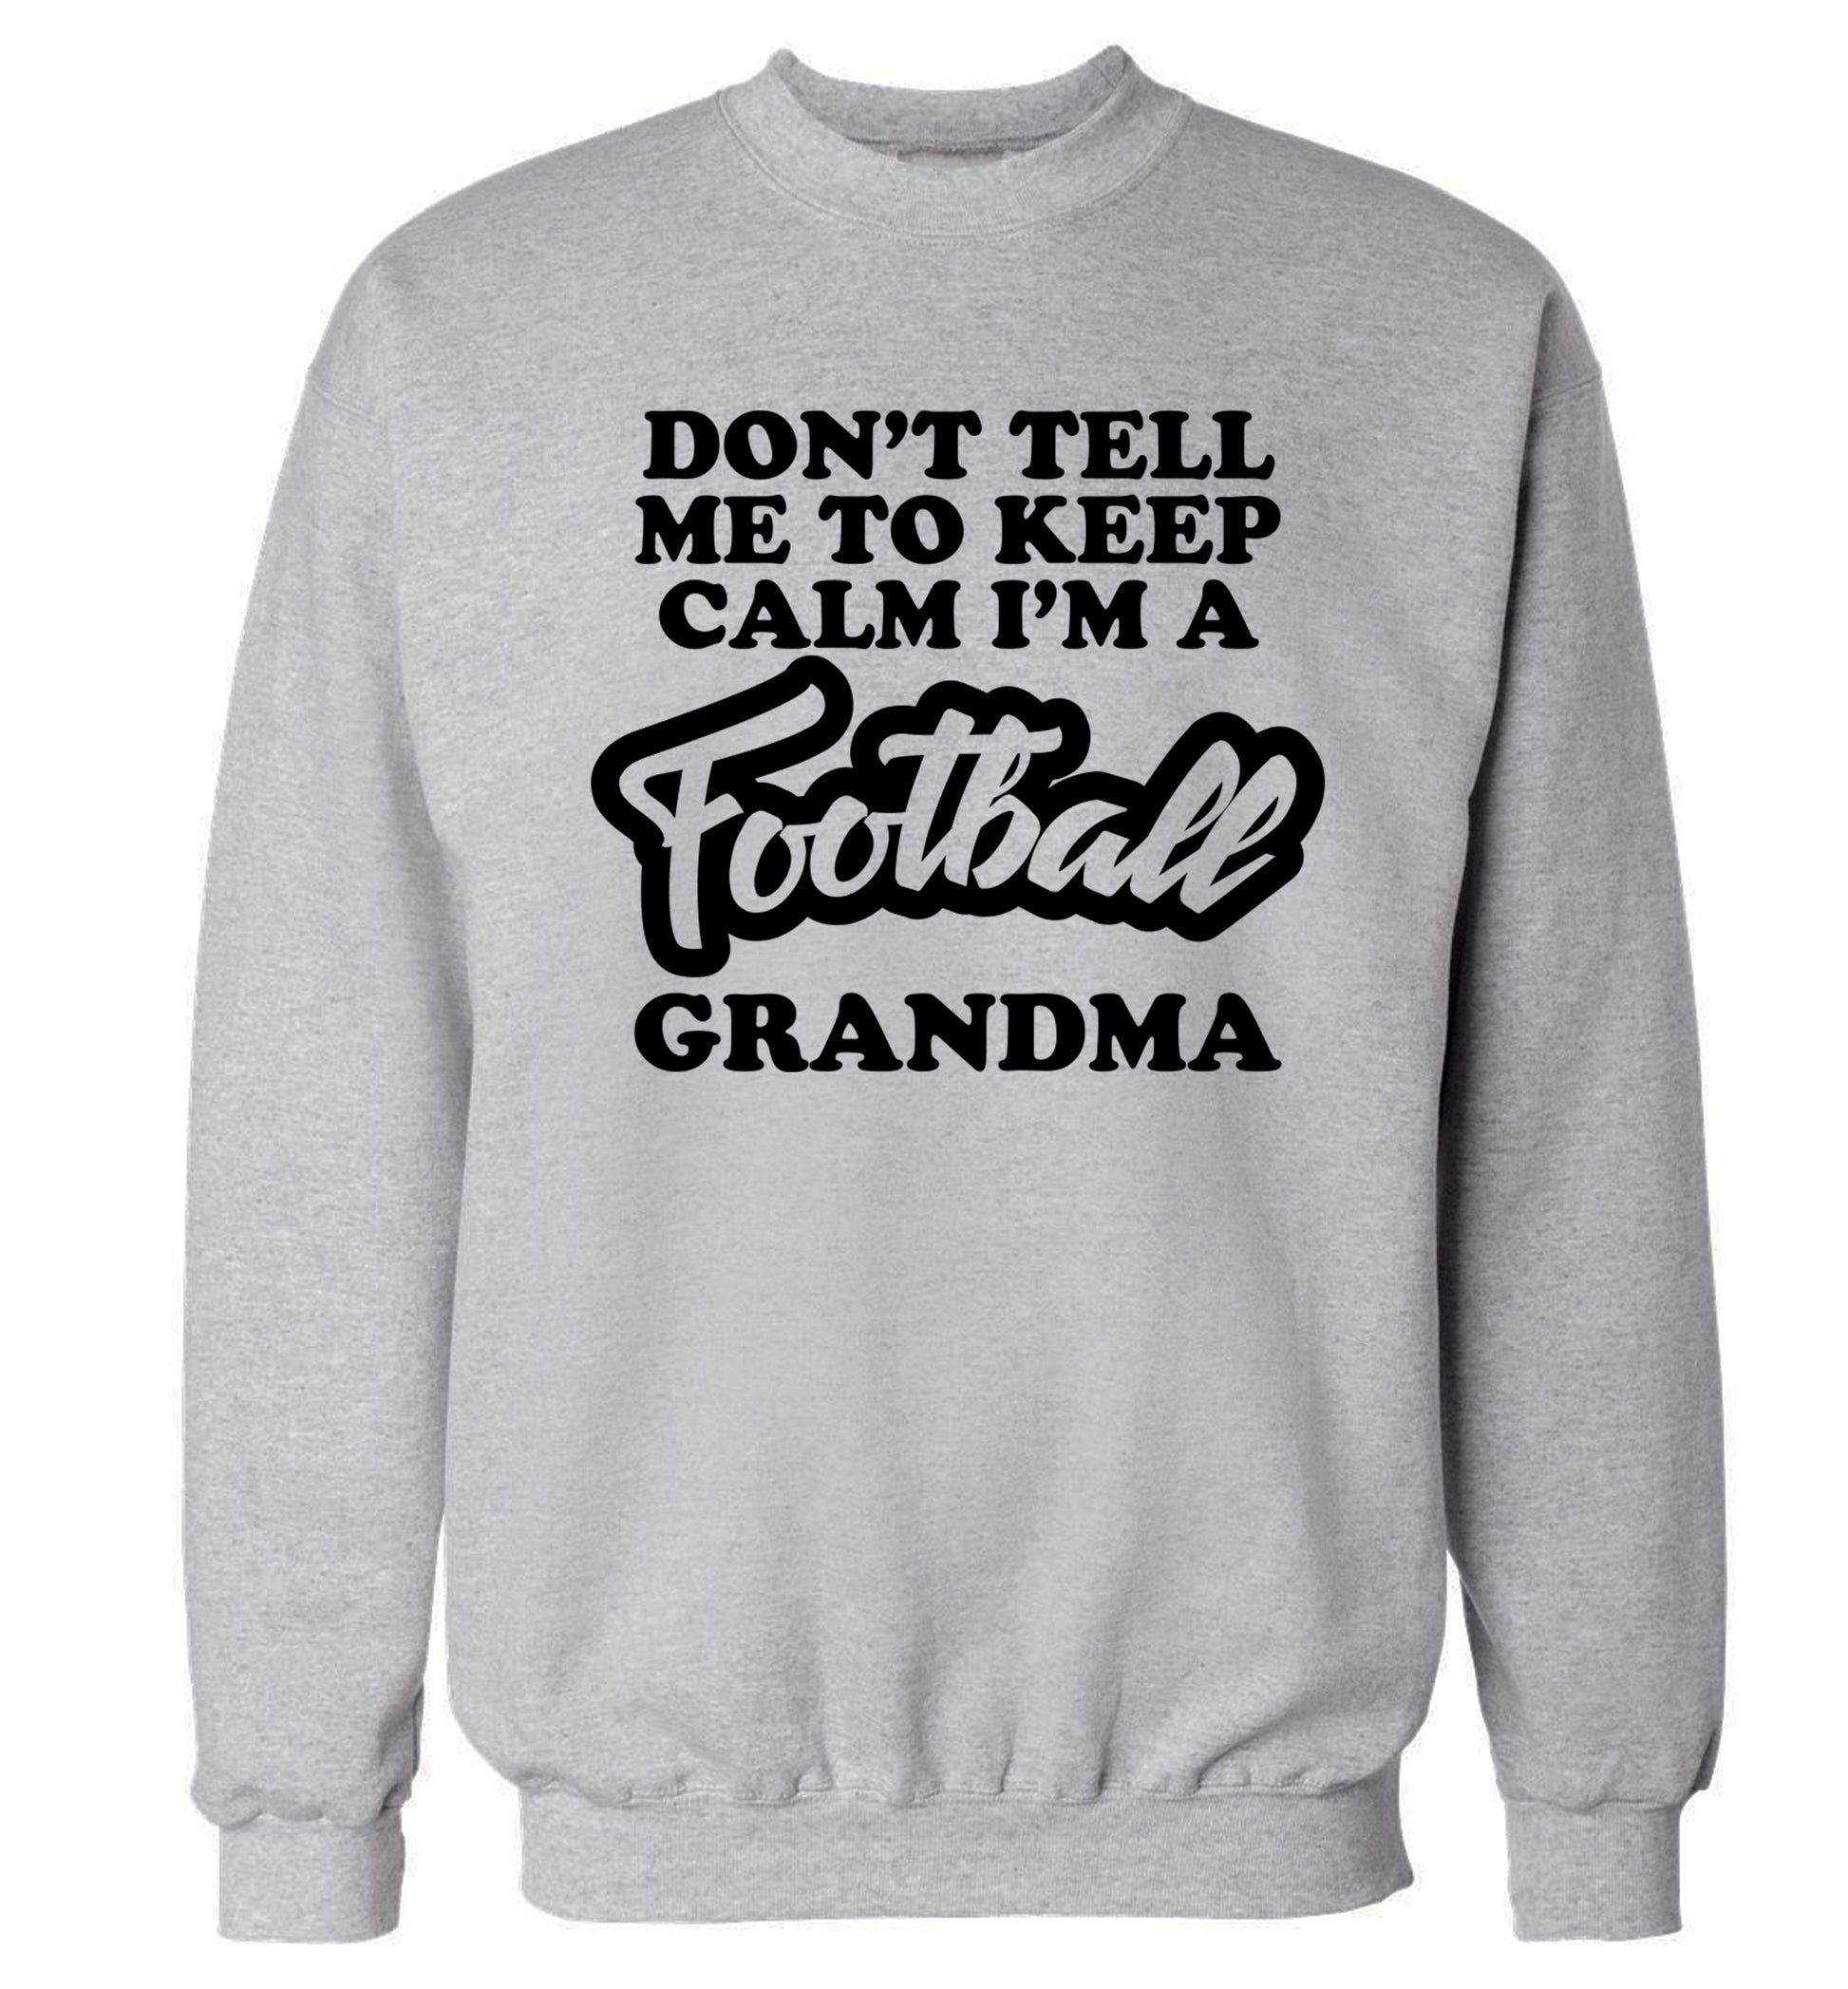 Don't tell me to keep calm I'm a football grandma Adult's unisexgrey Sweater 2XL